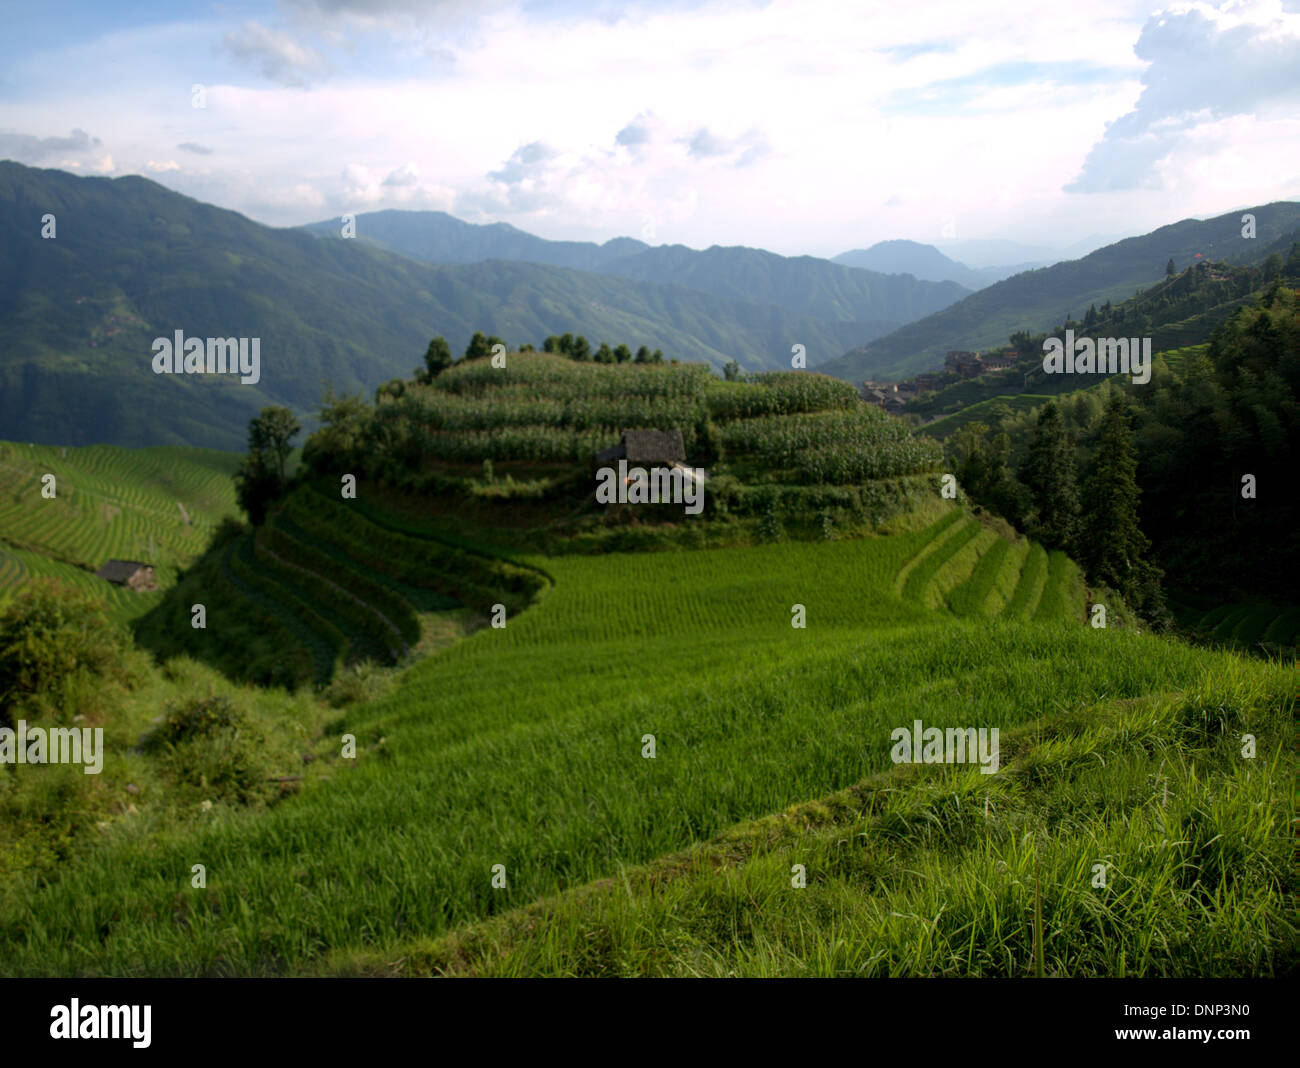 Il Longsheng terrazze di riso (Lóngshèng Tītián) o Dragon's Backbone terrazze di riso, situato nella contea di Longsheng, circa 100 km fro Foto Stock